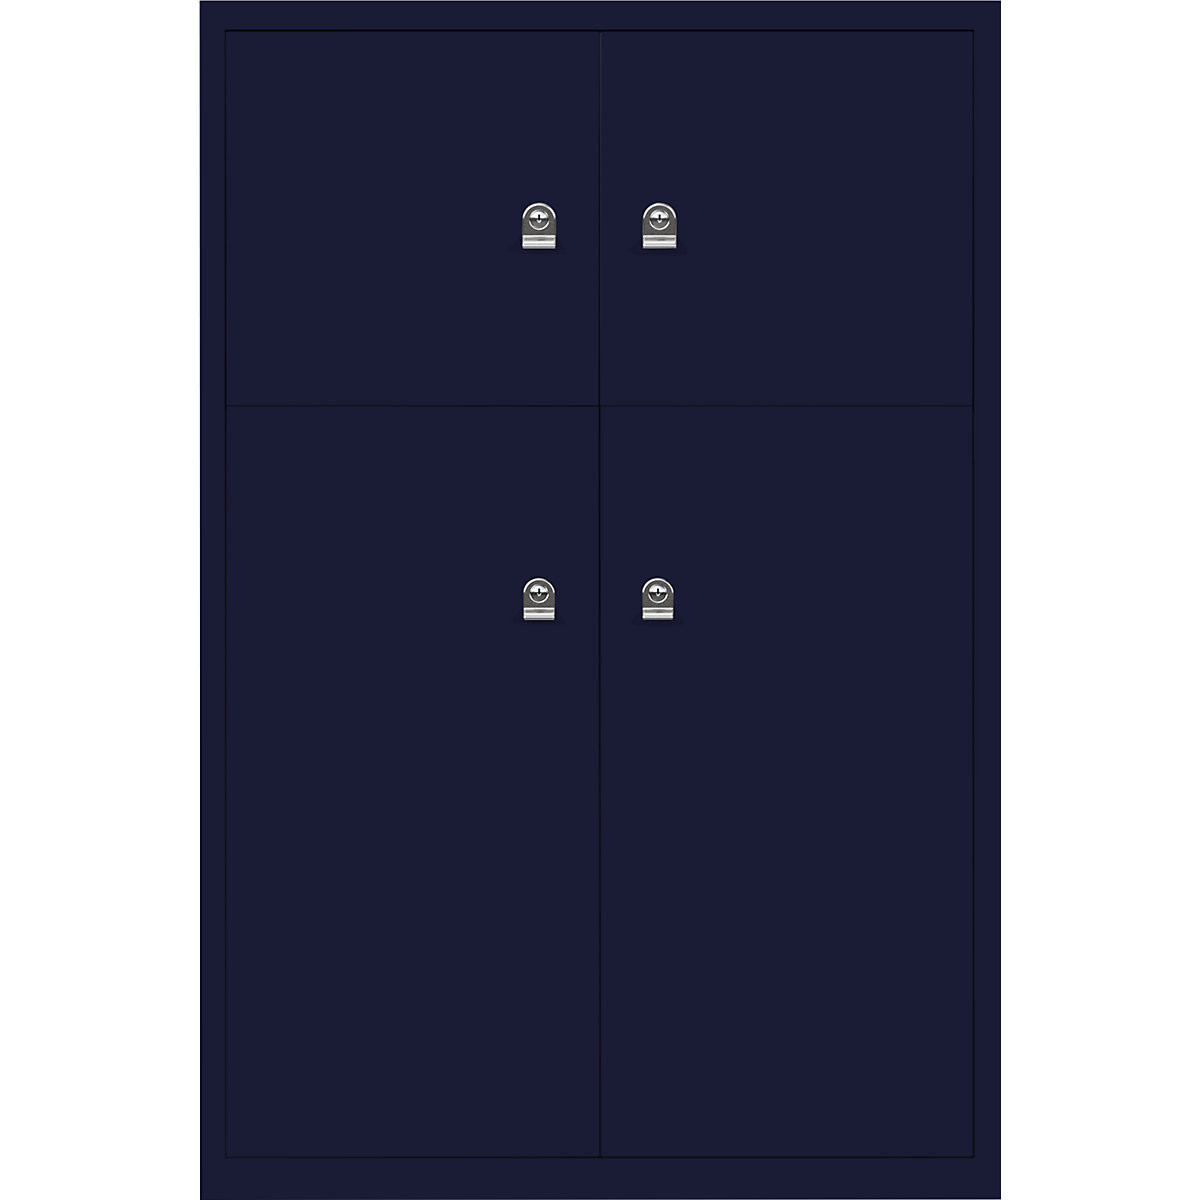 LateralFile™ Lodge – BISLEY, so 4 uzamykacími priehradkami, výška 2 x 375 mm, 2 x 755 mm, oxfordská modrá-23